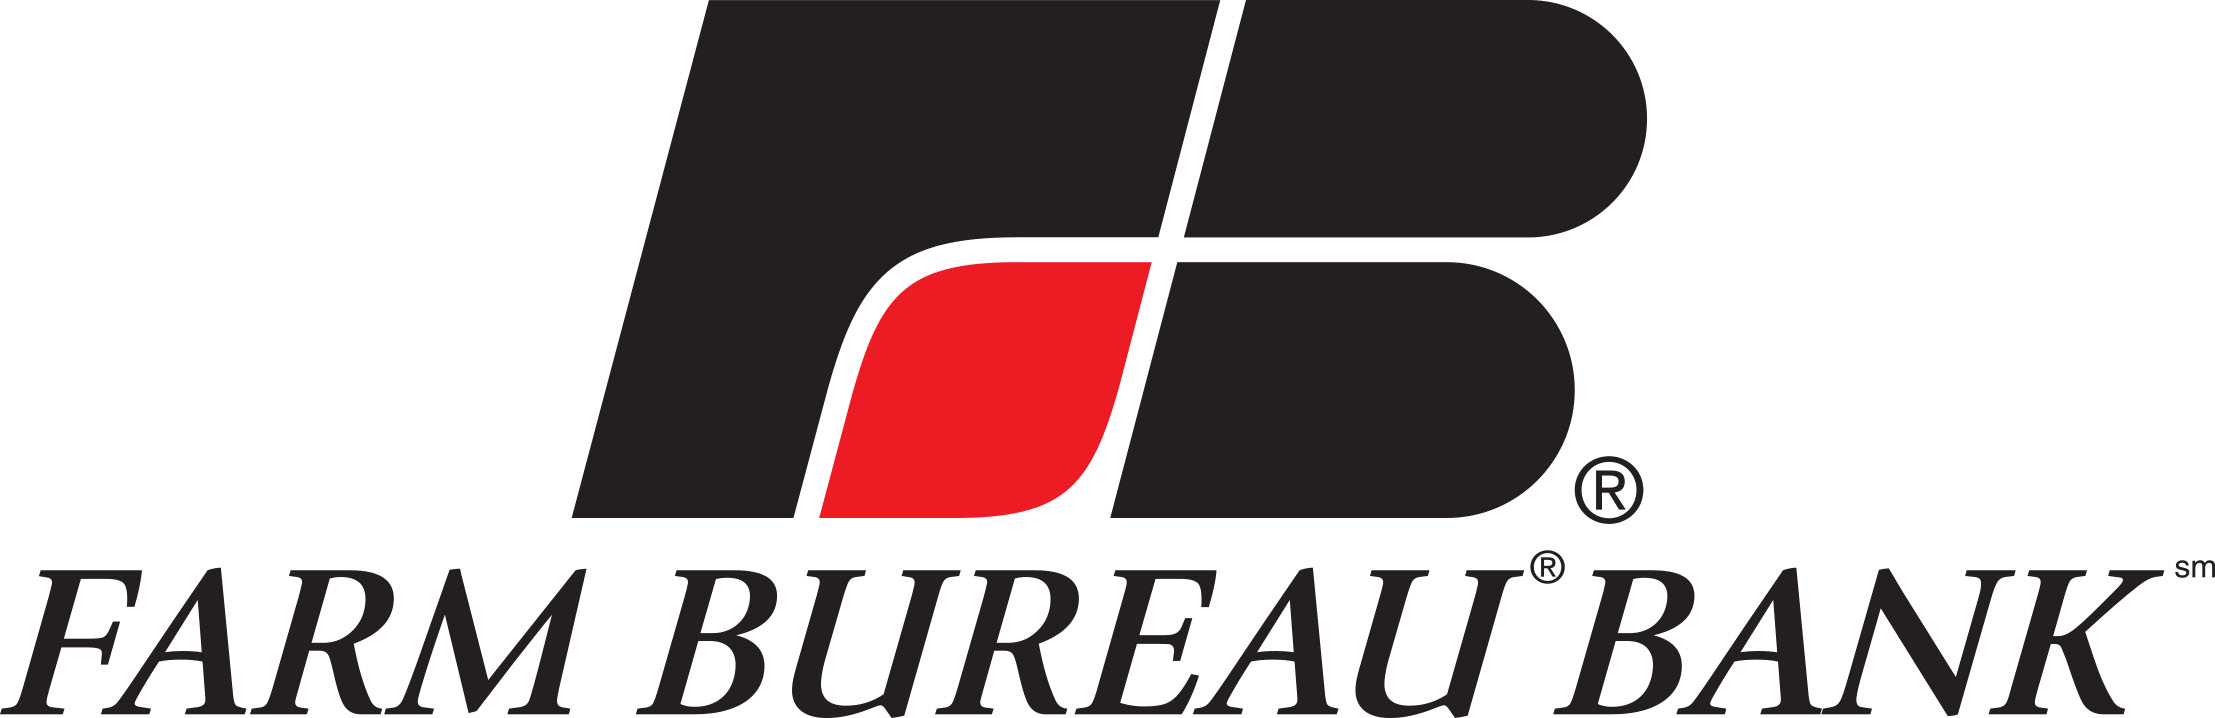 Farm Bureau Bank Logo